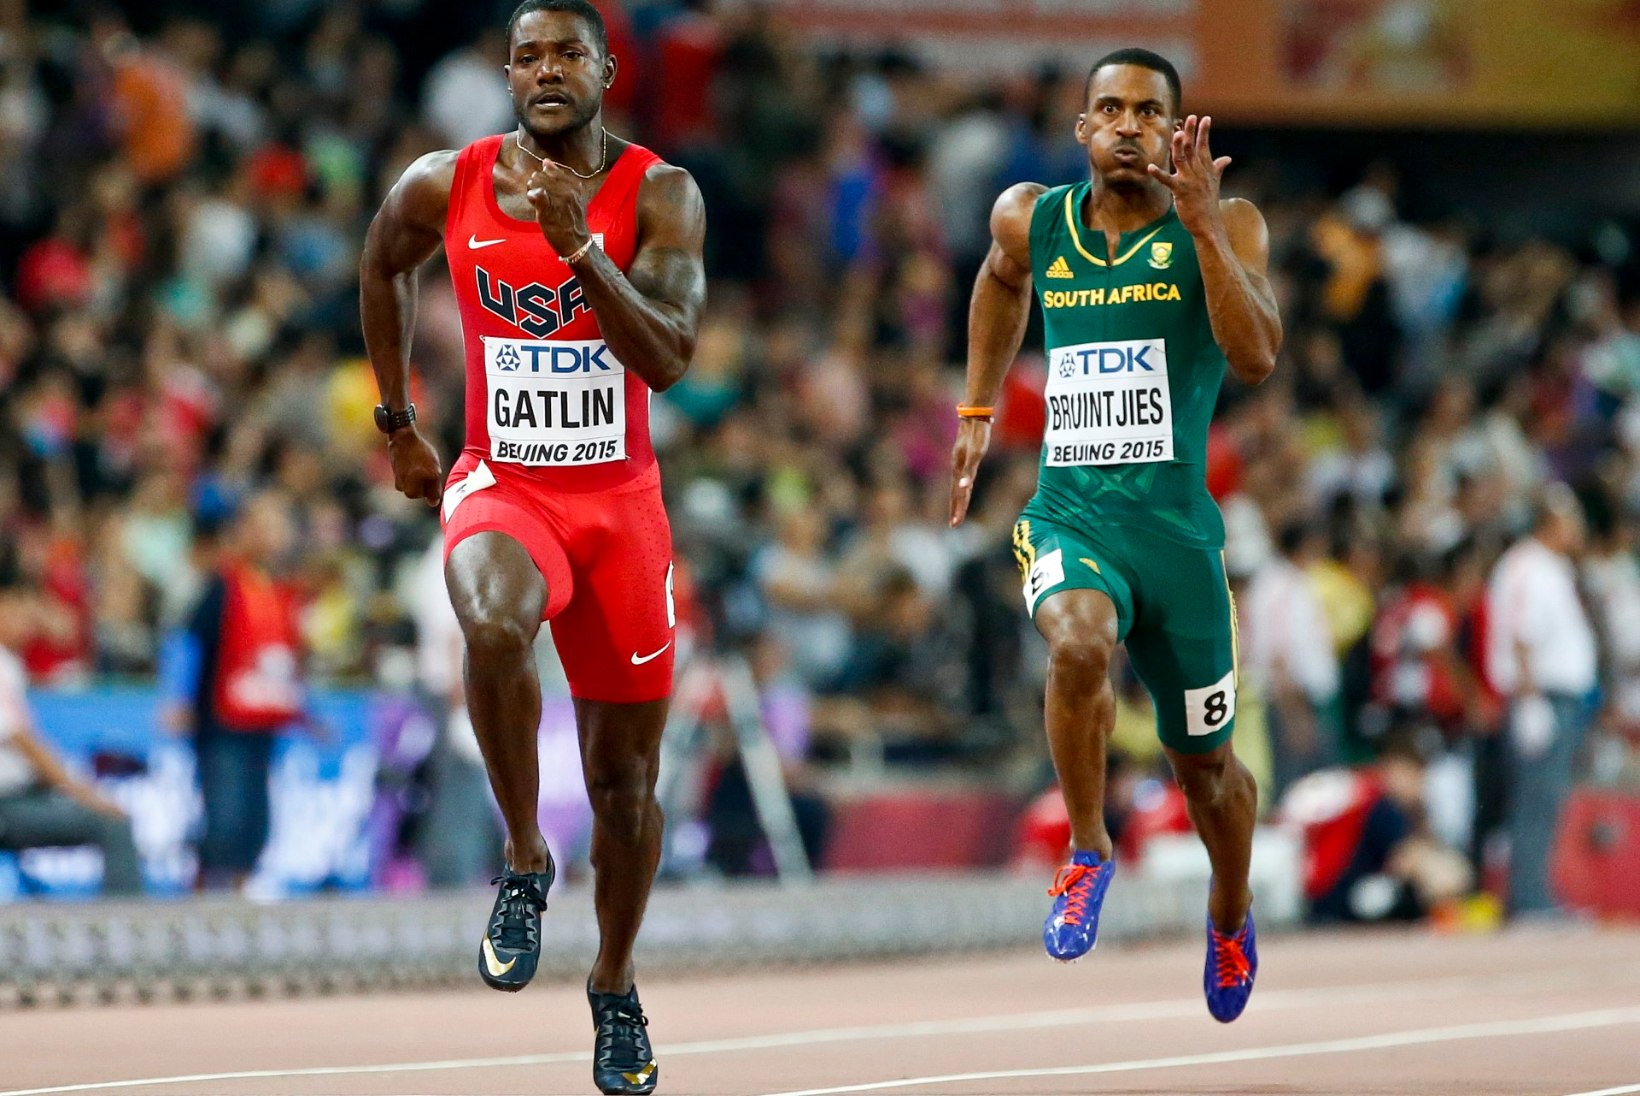 FOTOD: Gatlin andis tormihoiatuse, Bolt samuti tasemel